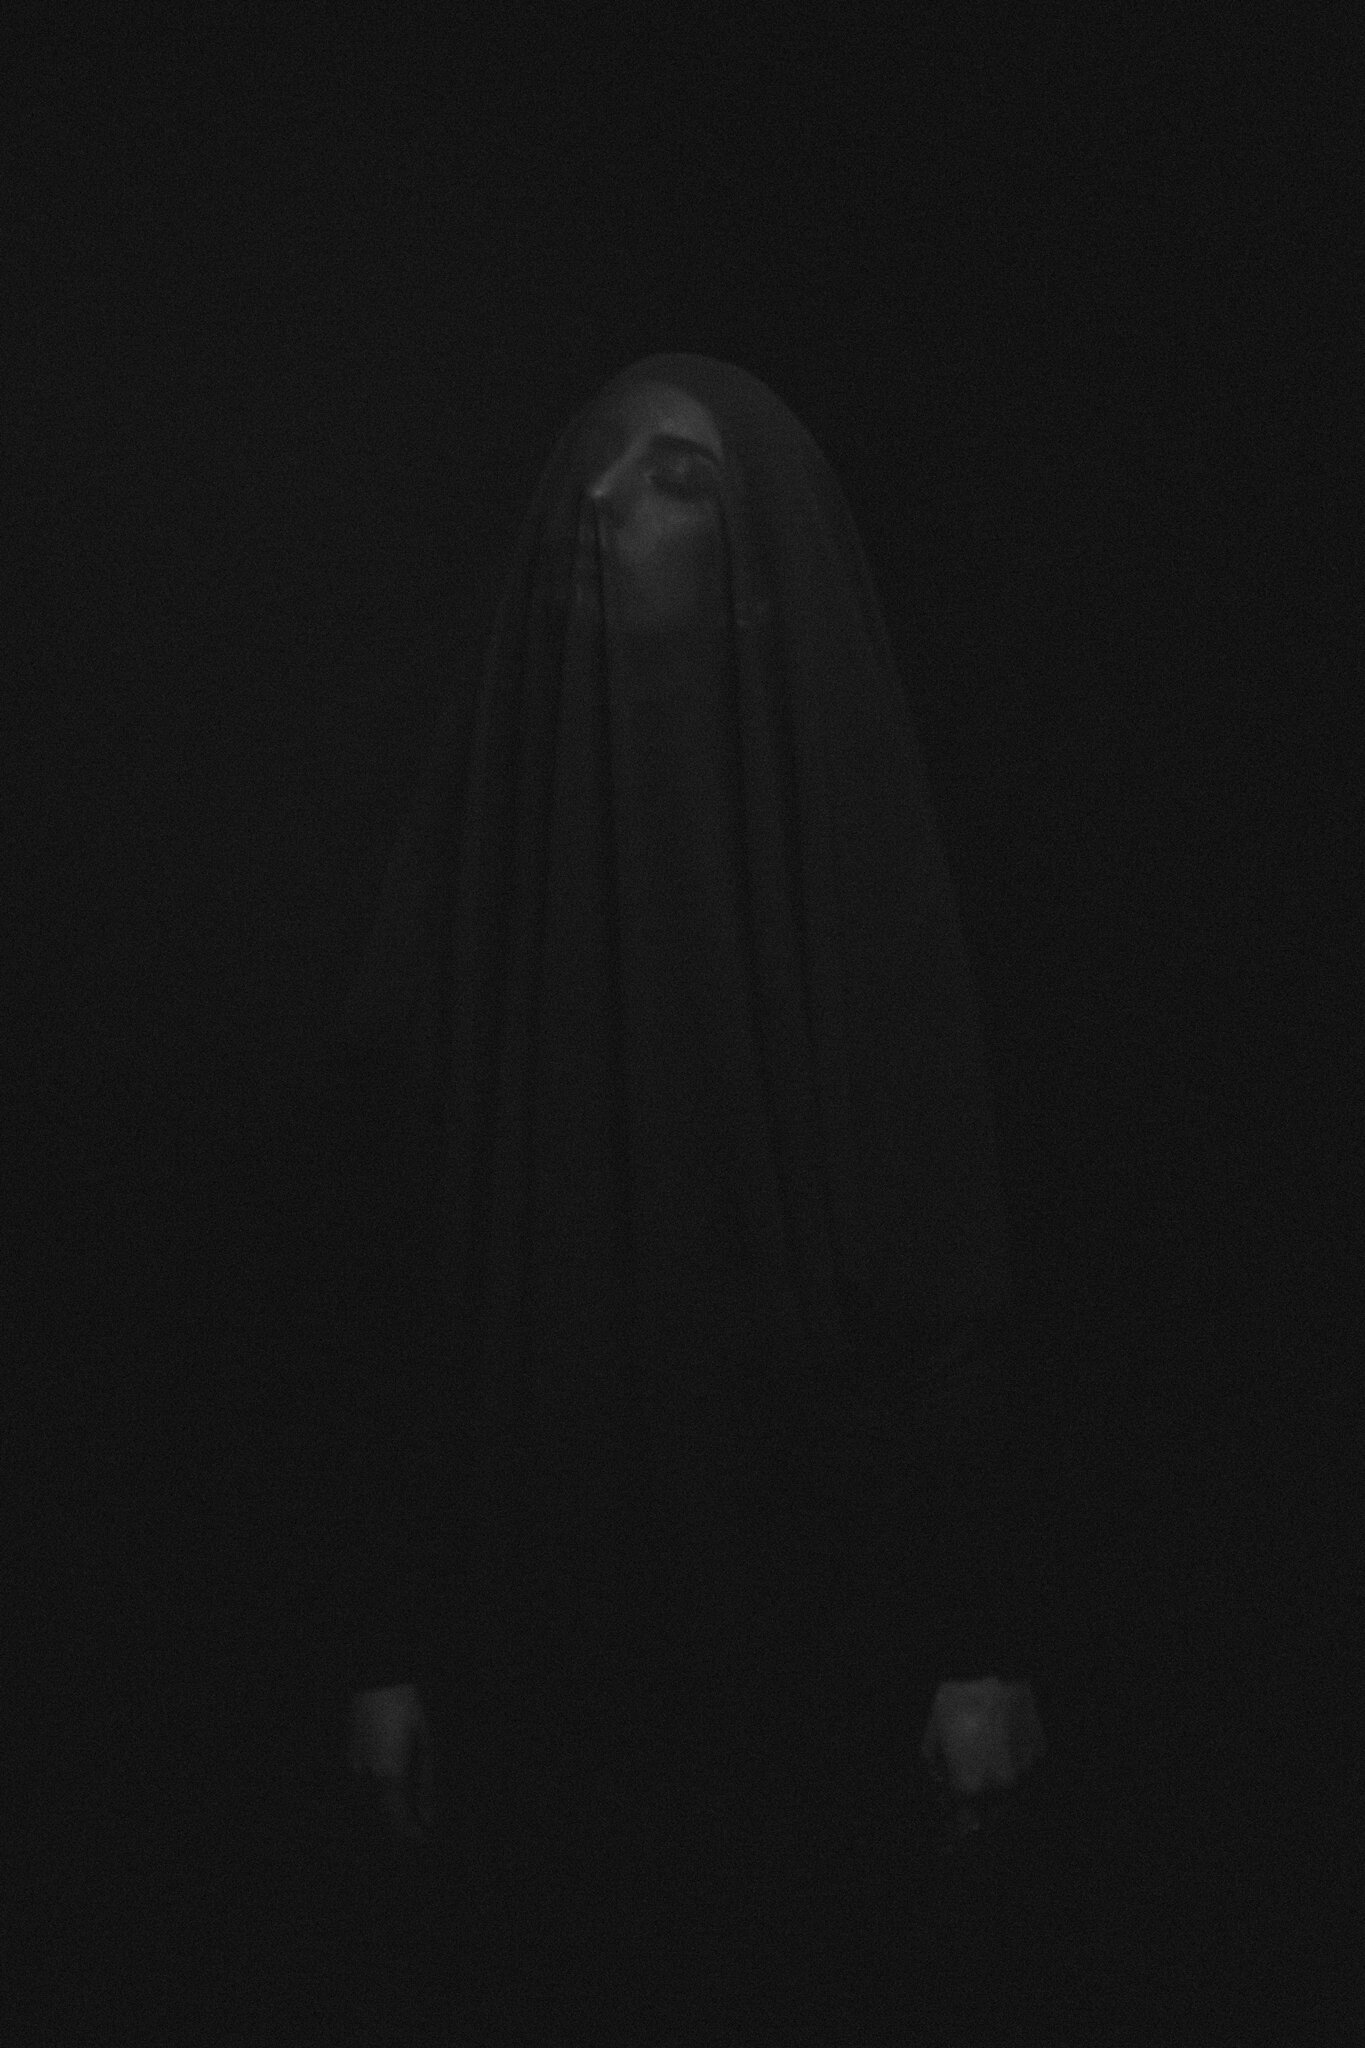 Olga-Tenyanin-Portrait-Photographer-Portland-Oregon-Vancouver-Washington-Spooky-shroud-veil-portrait-eerie-7.jpg